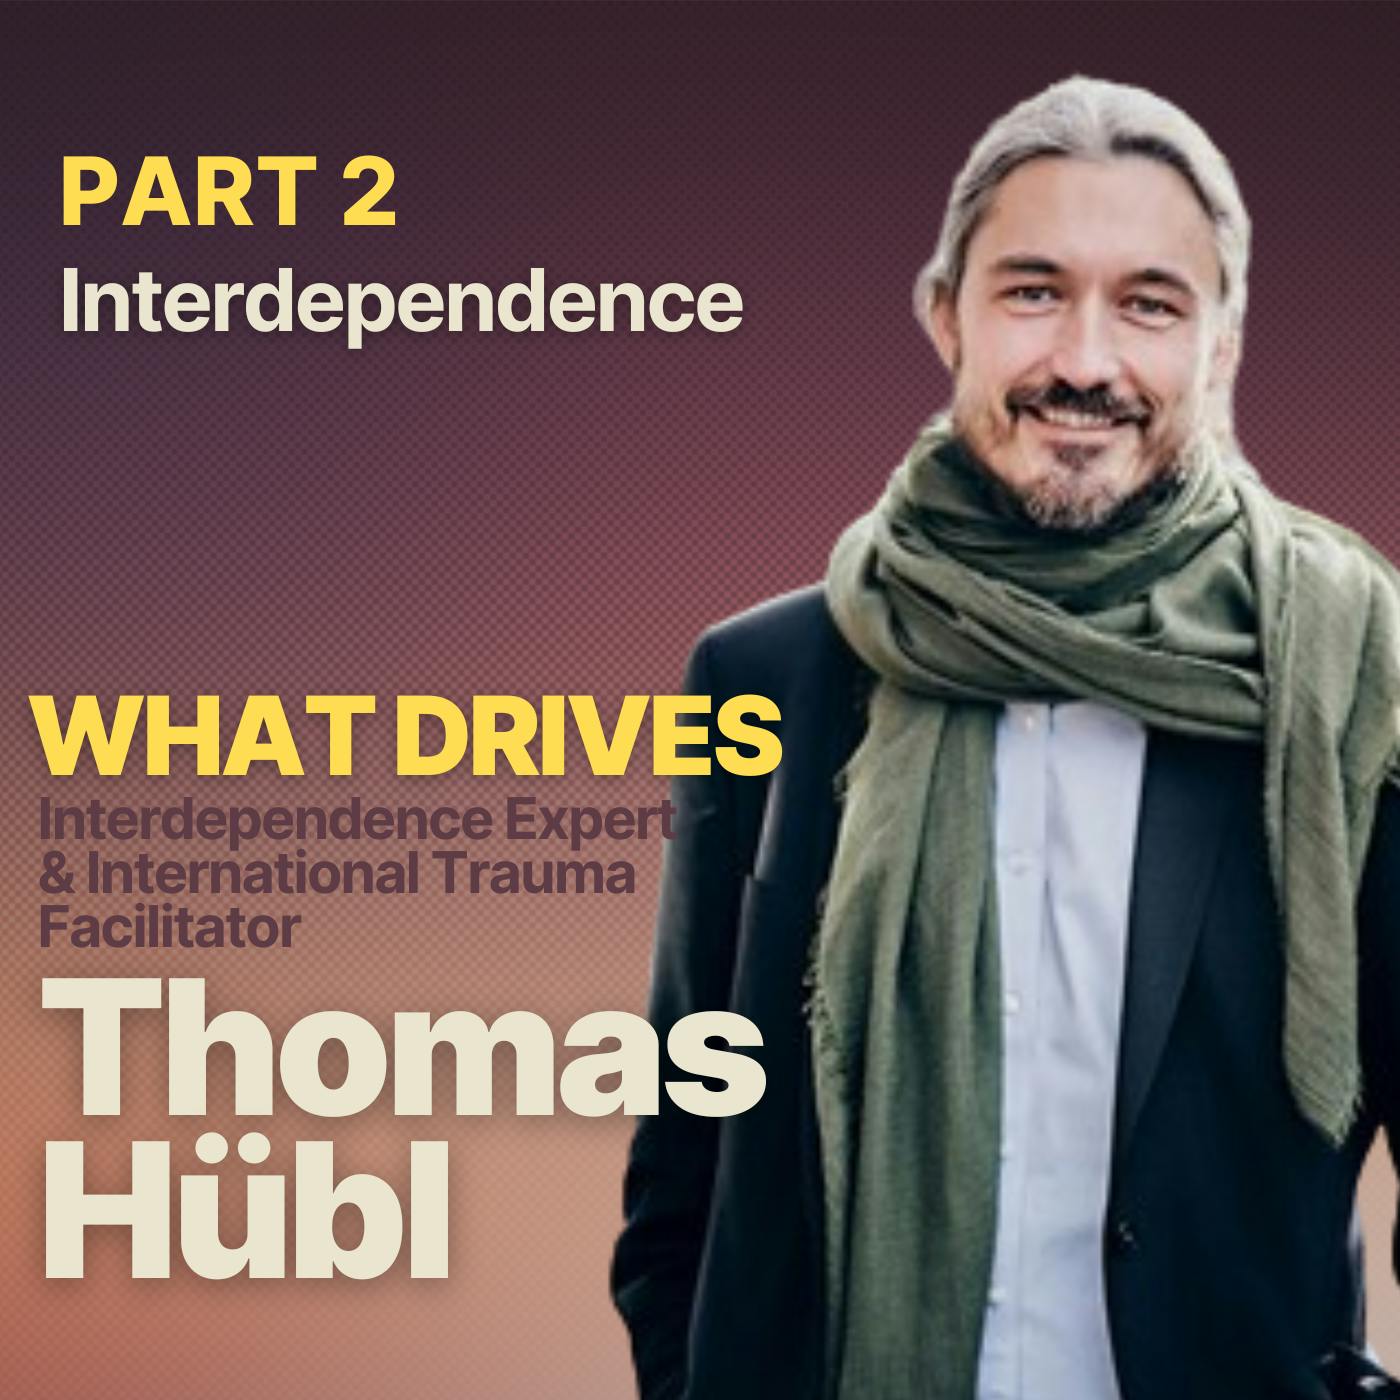 What Drives Interdependence Expert & International Trauma Facilitator Thomas Hübl